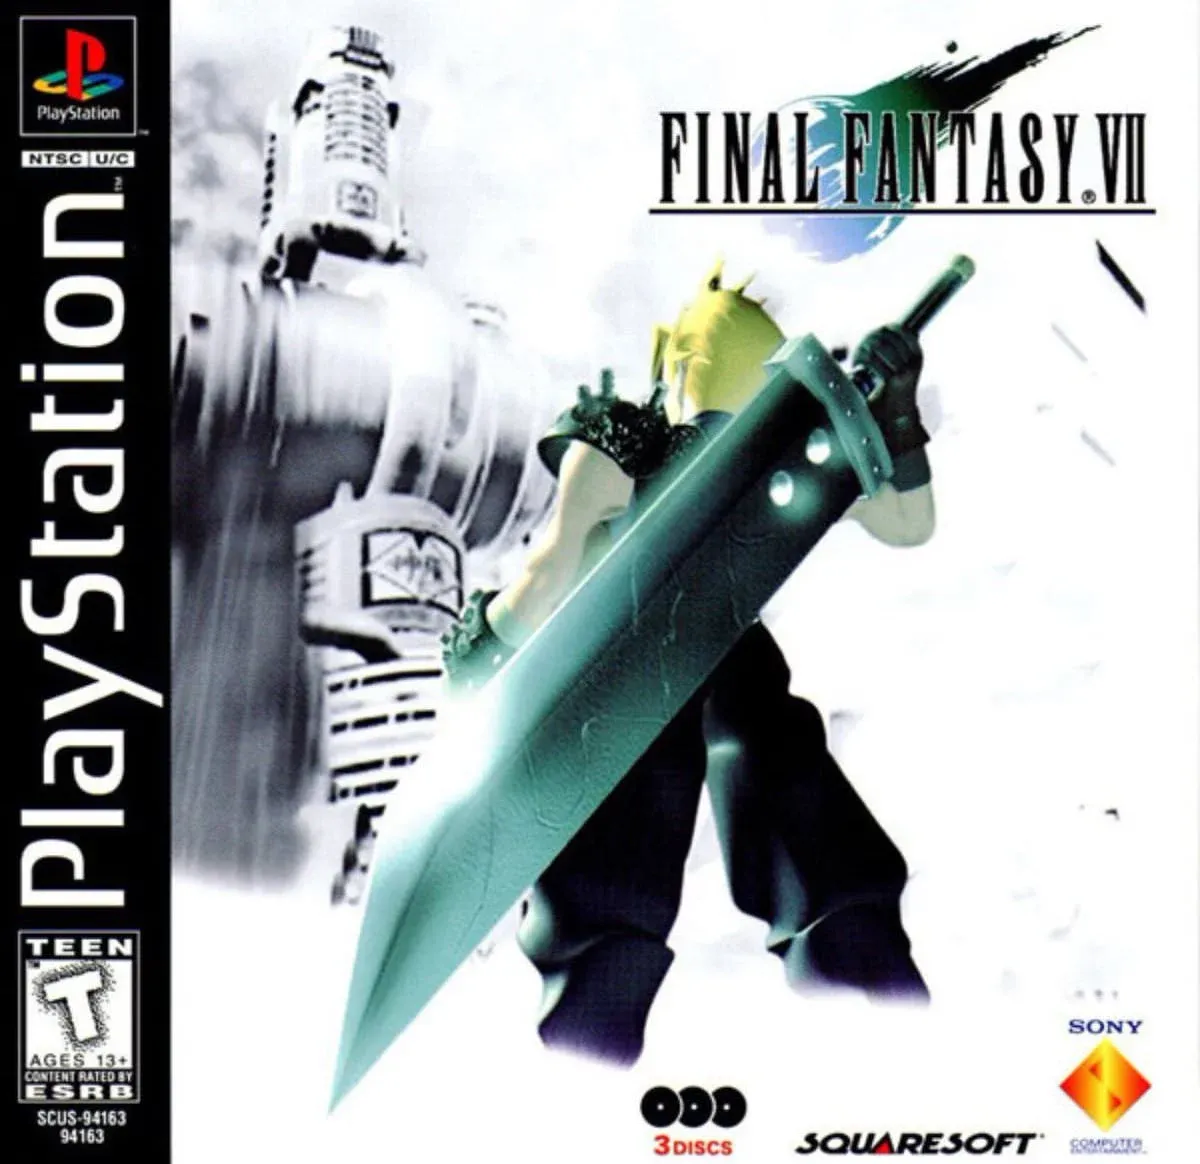 PlayStation box art for Final Fantasy VII